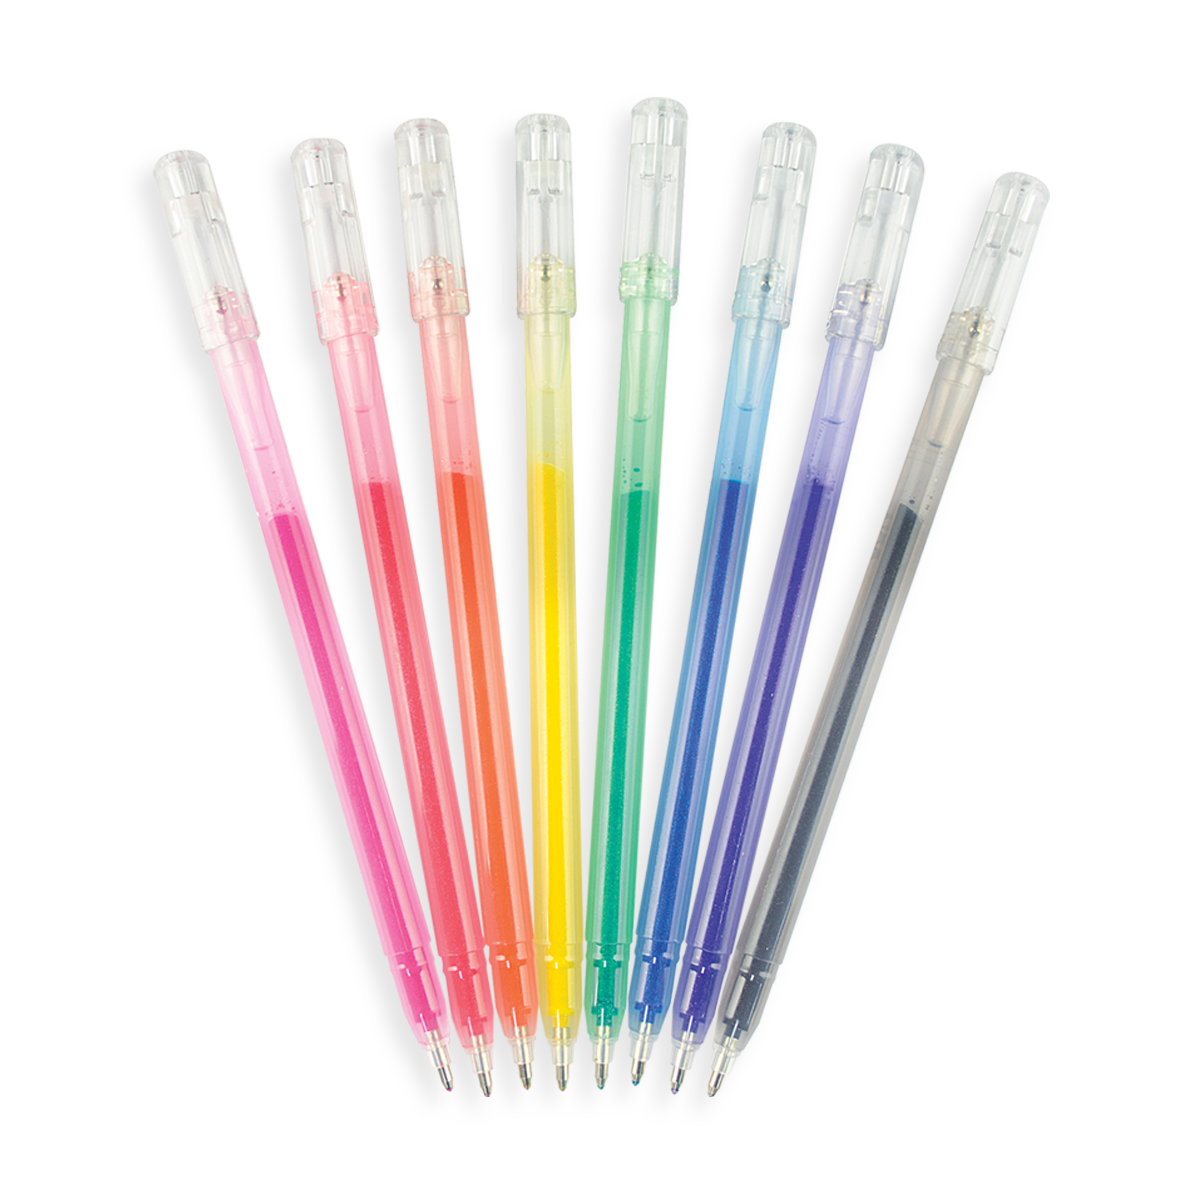 TAYLORELLIOTT Sparkle Gel Ink Pen Set